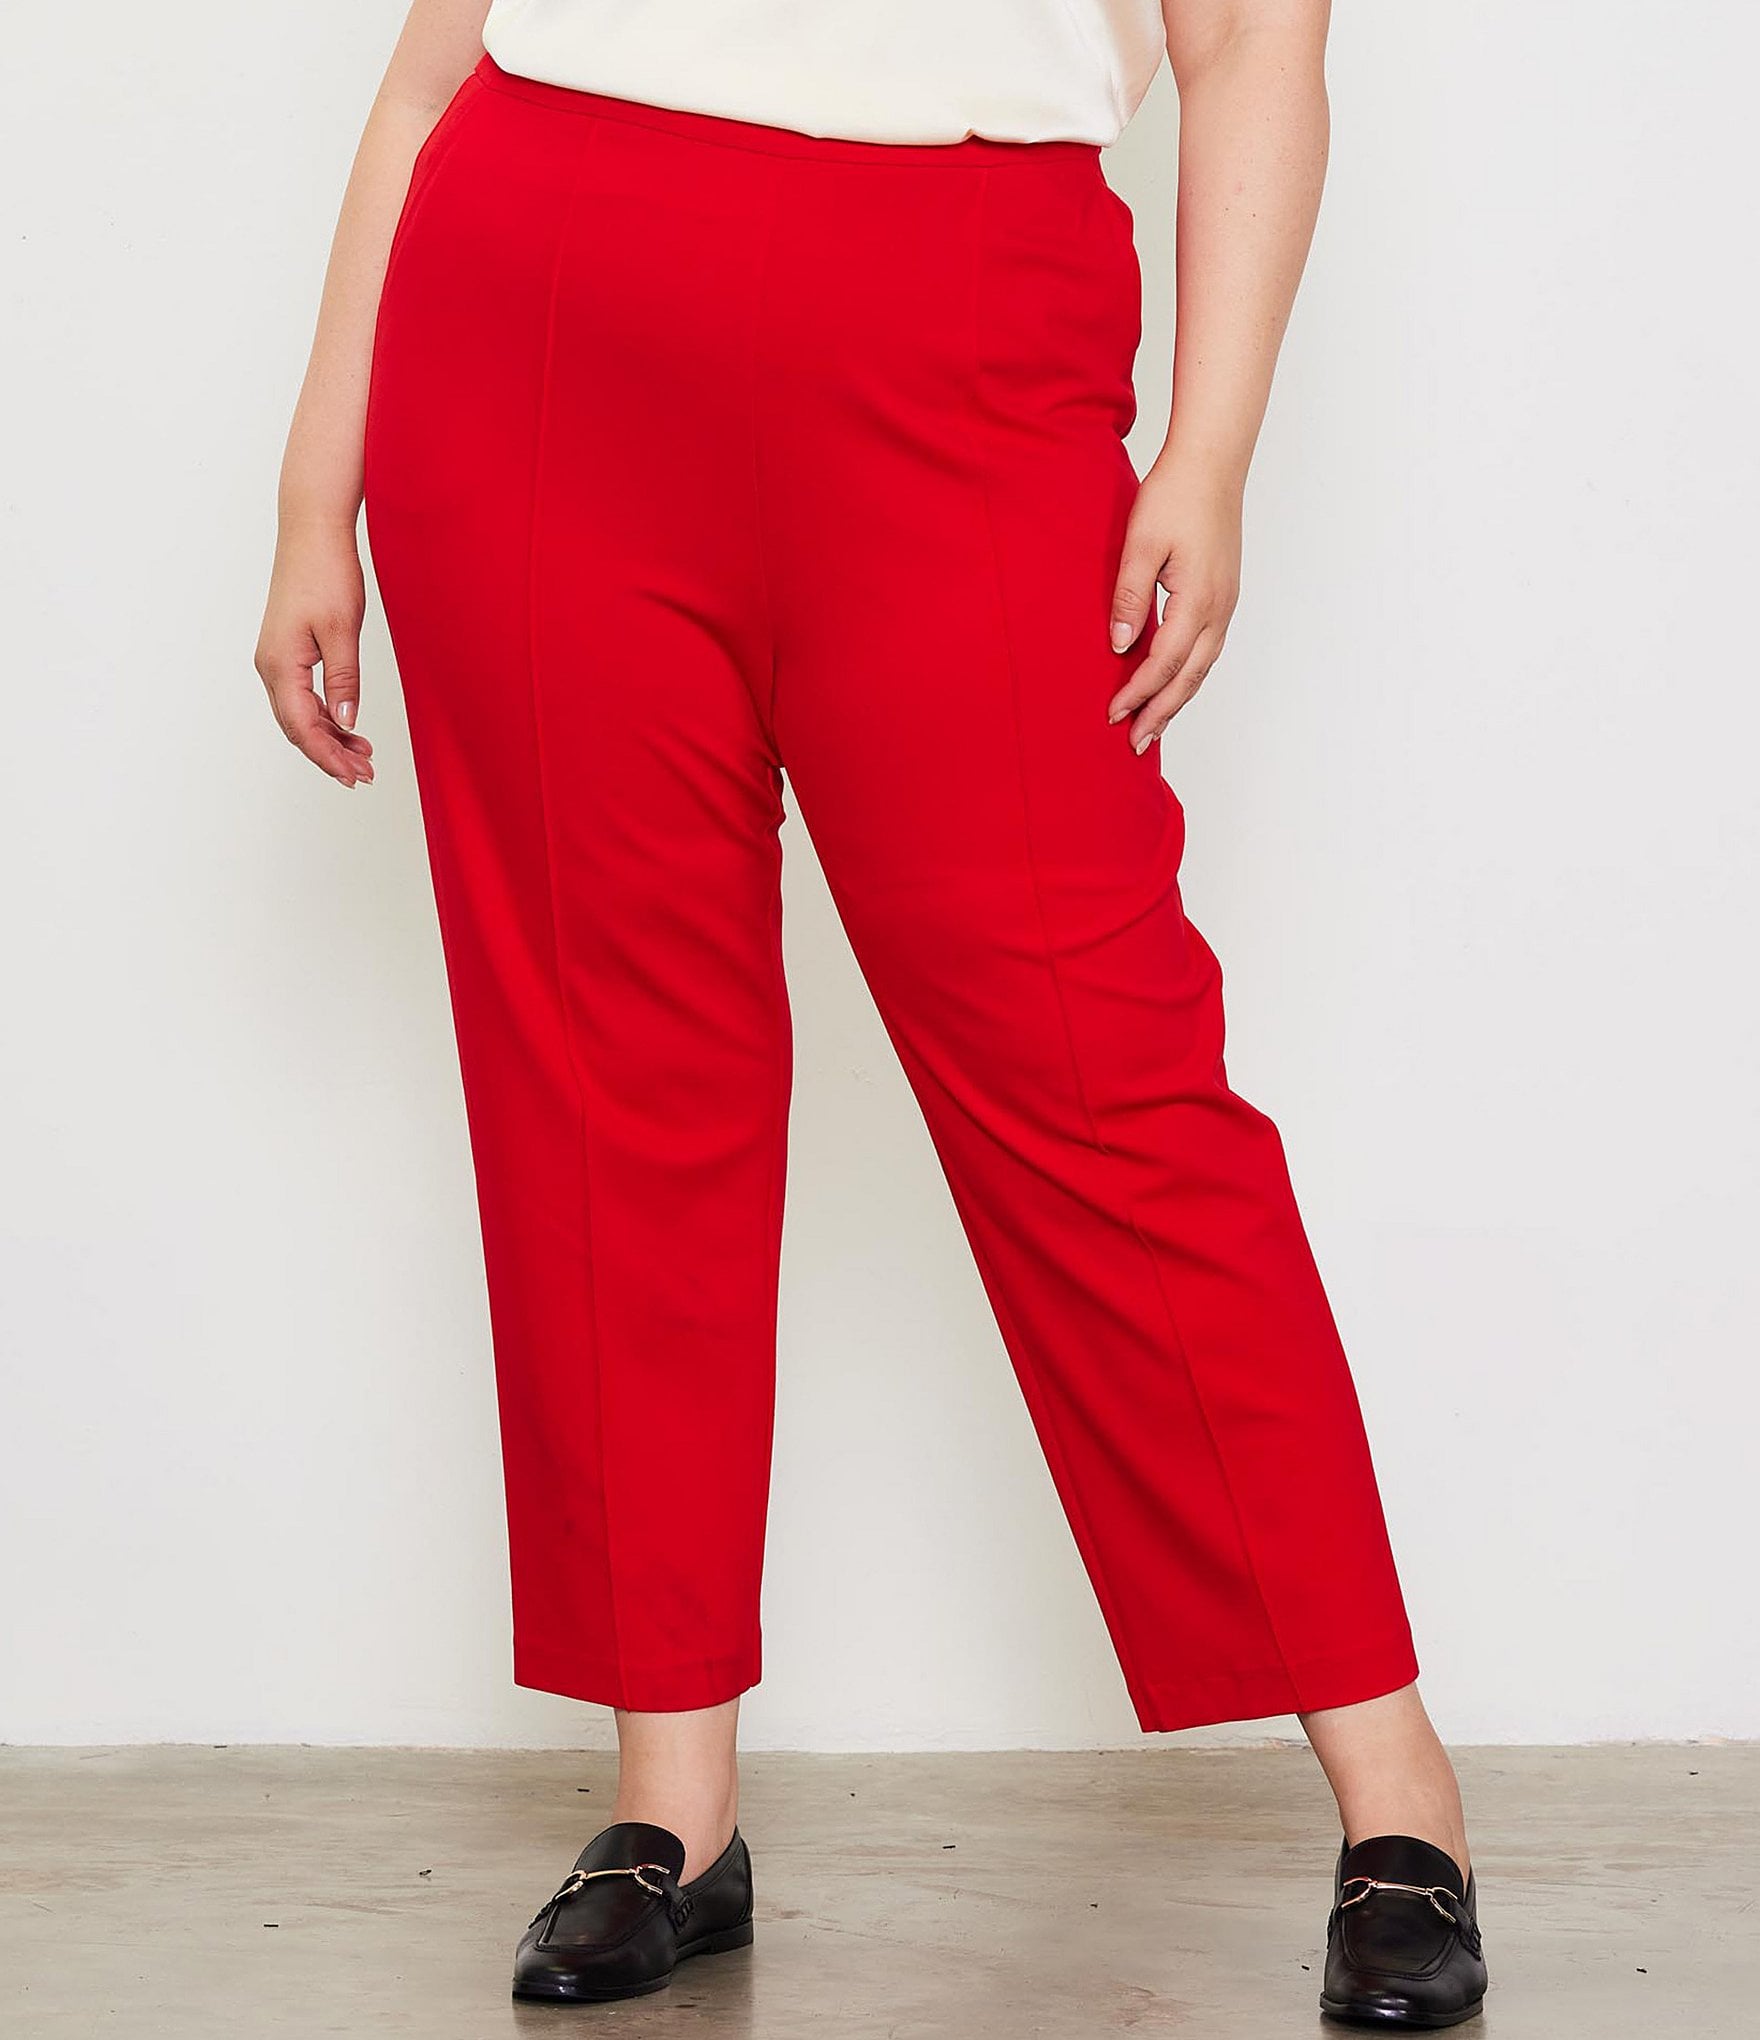 Yours Clothing Leggings - Trousers - red - Zalando.de